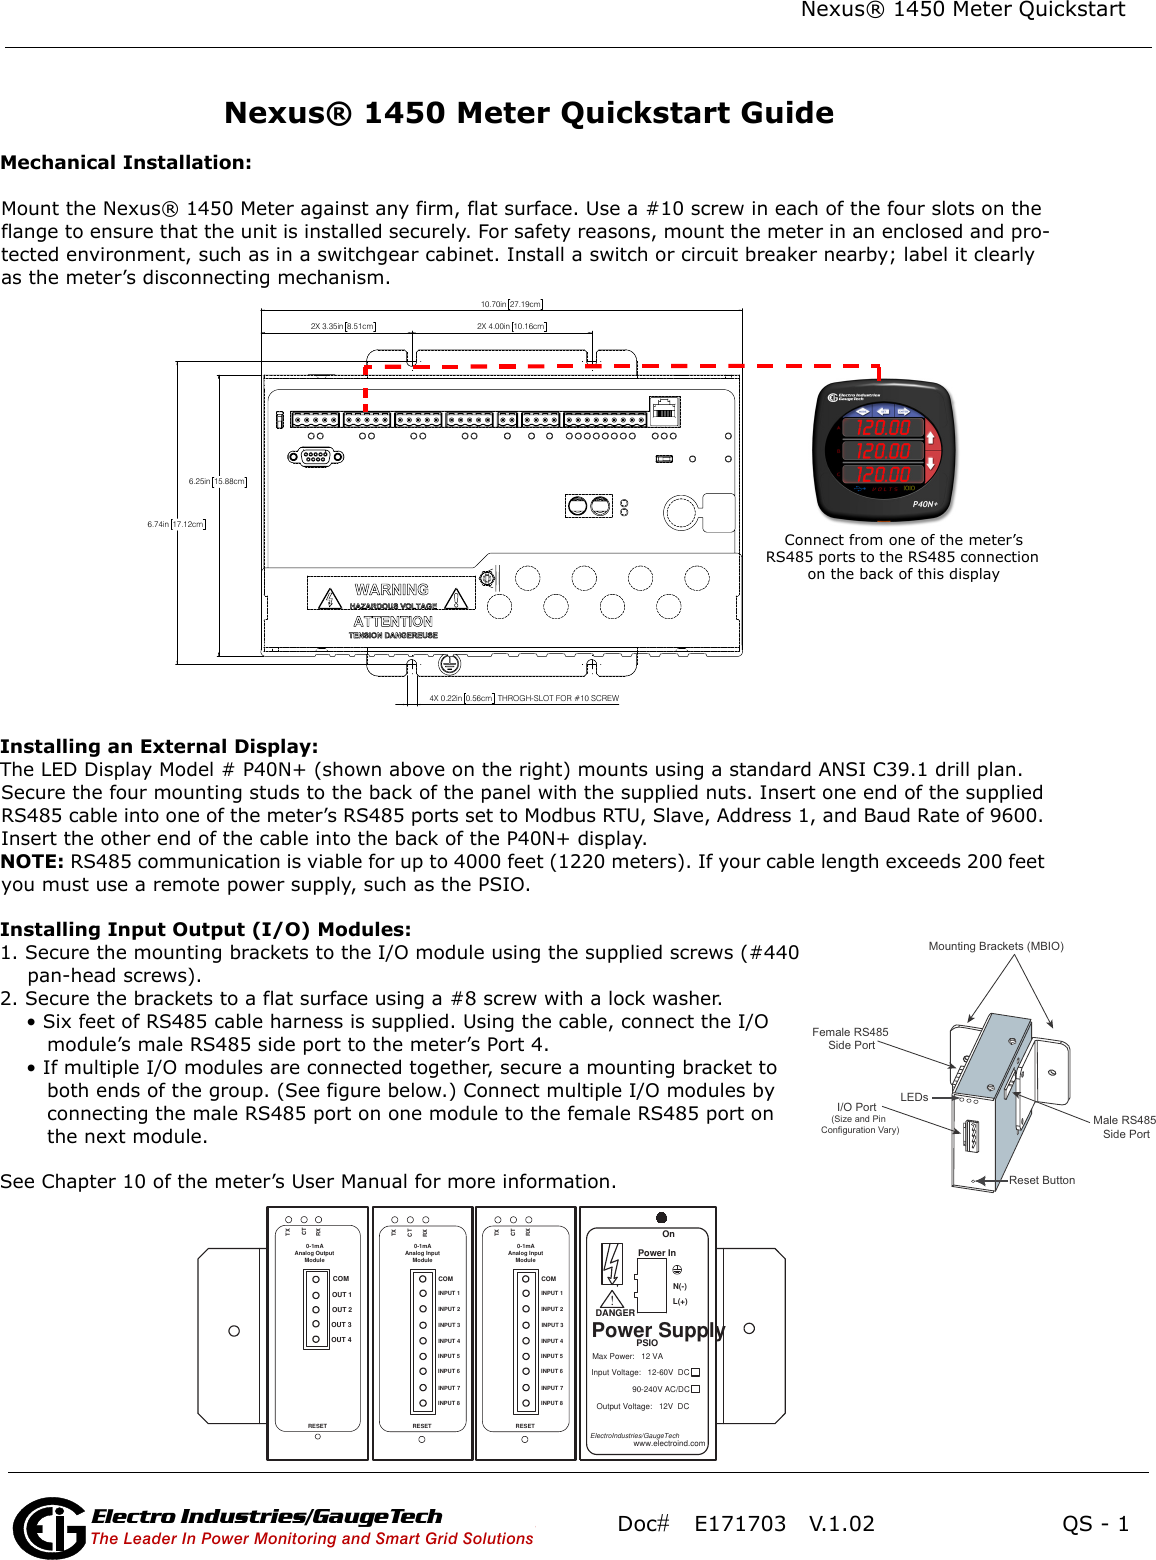 Page 1 of 4 - Nexus 1450 Meter QS Guide V.1.02 Nexus-1450-Meter-Quickstart-Guide E171703